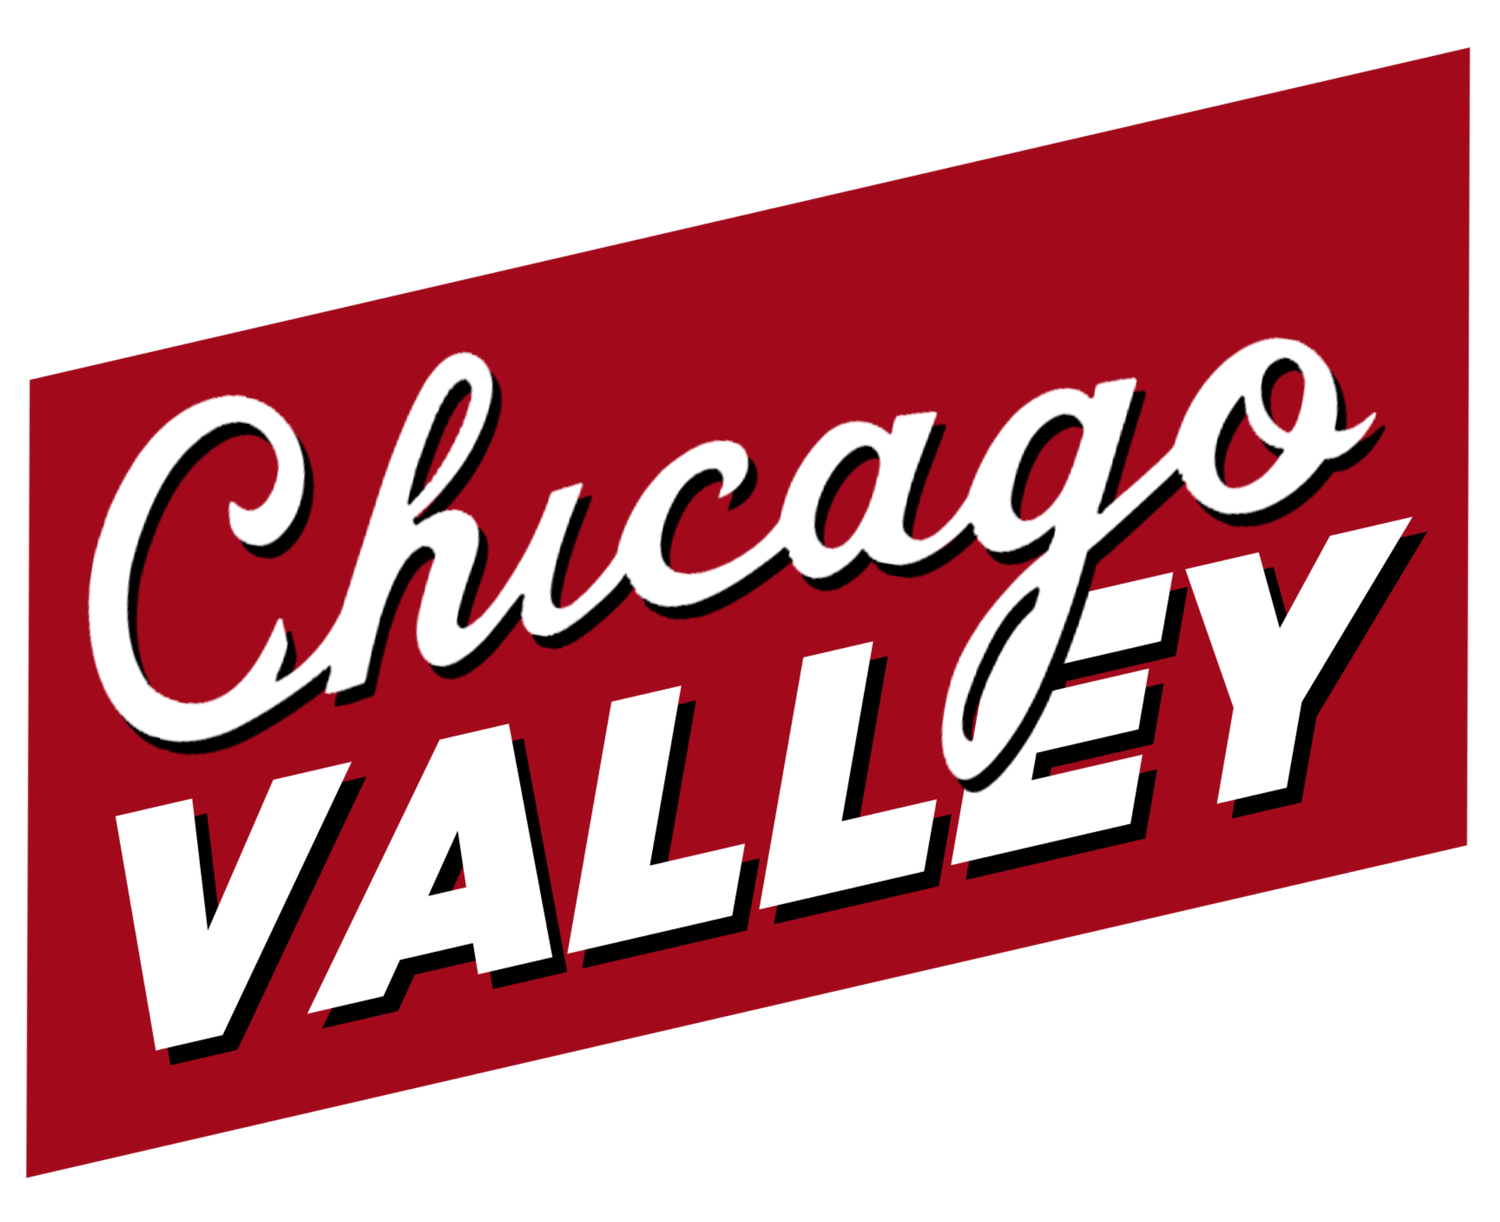 Chicago Valley